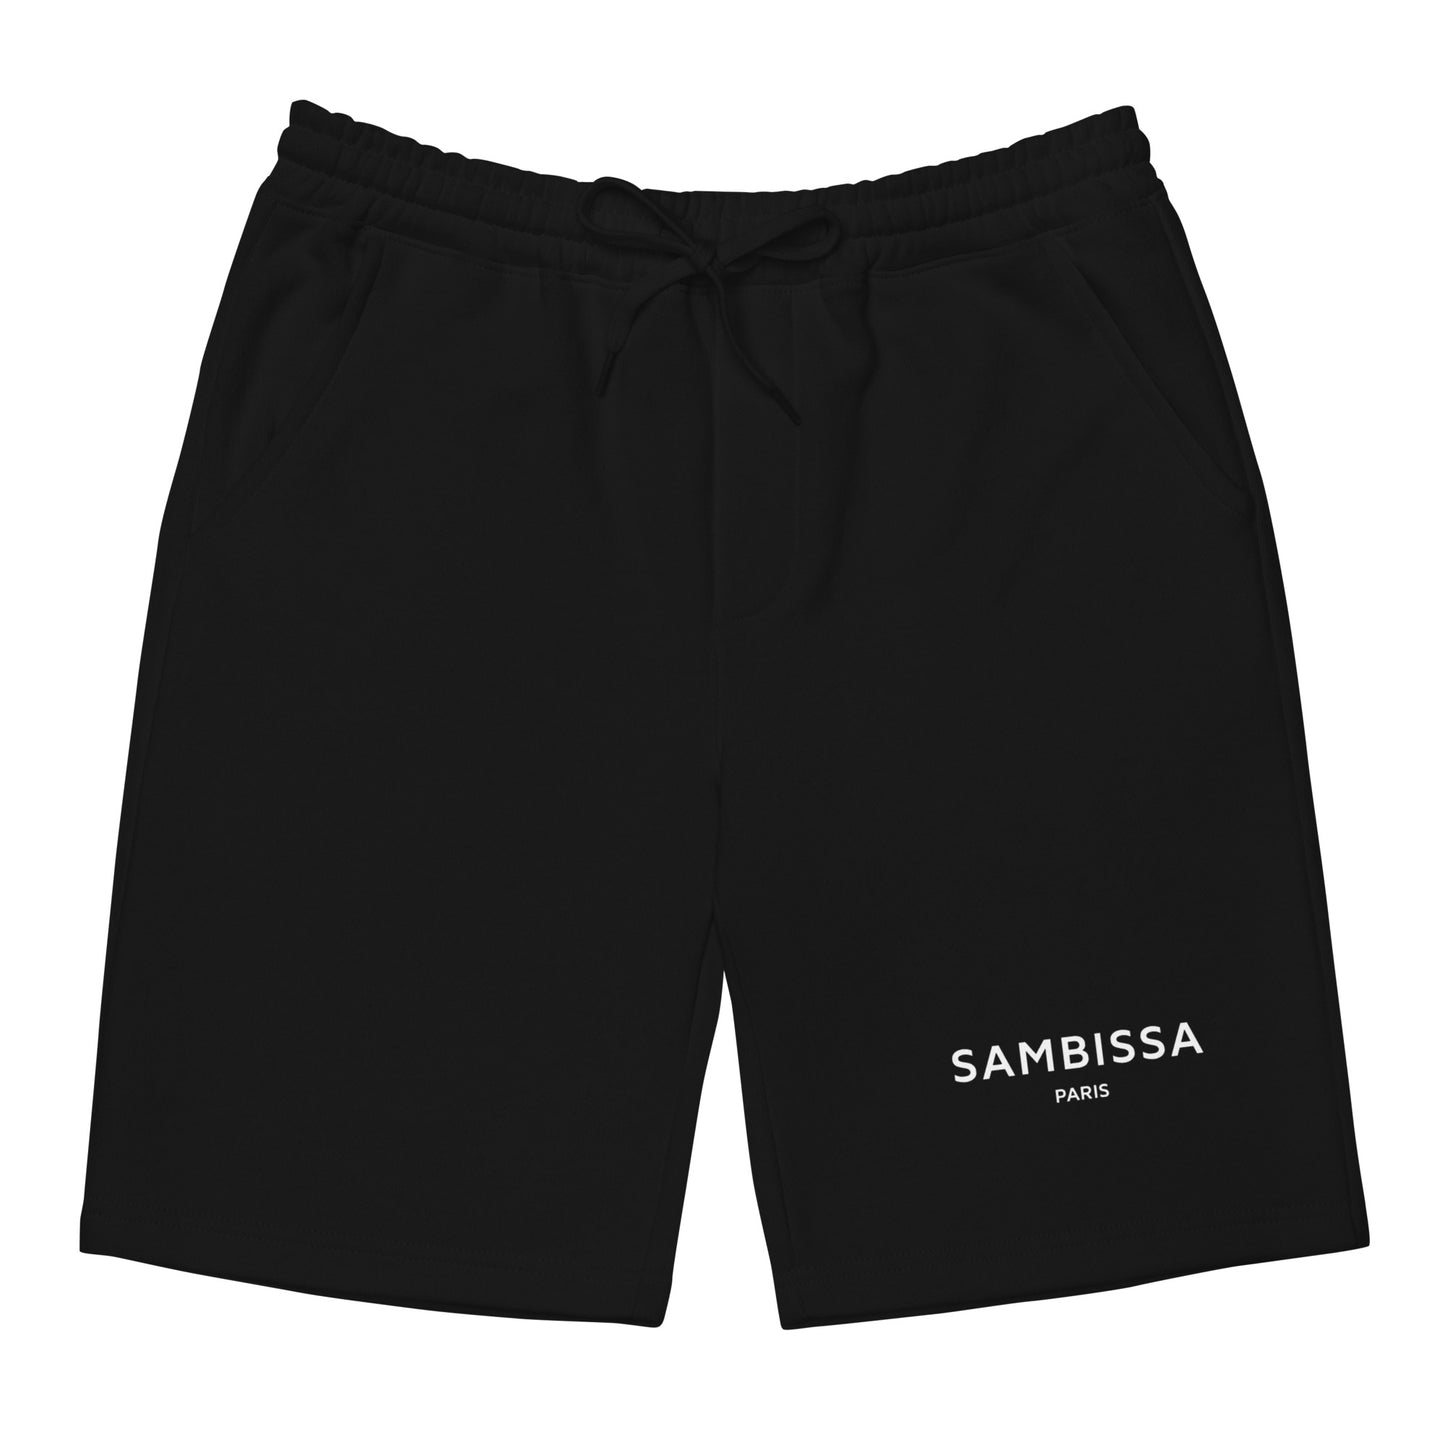 Sambissa shorts fleece cotton